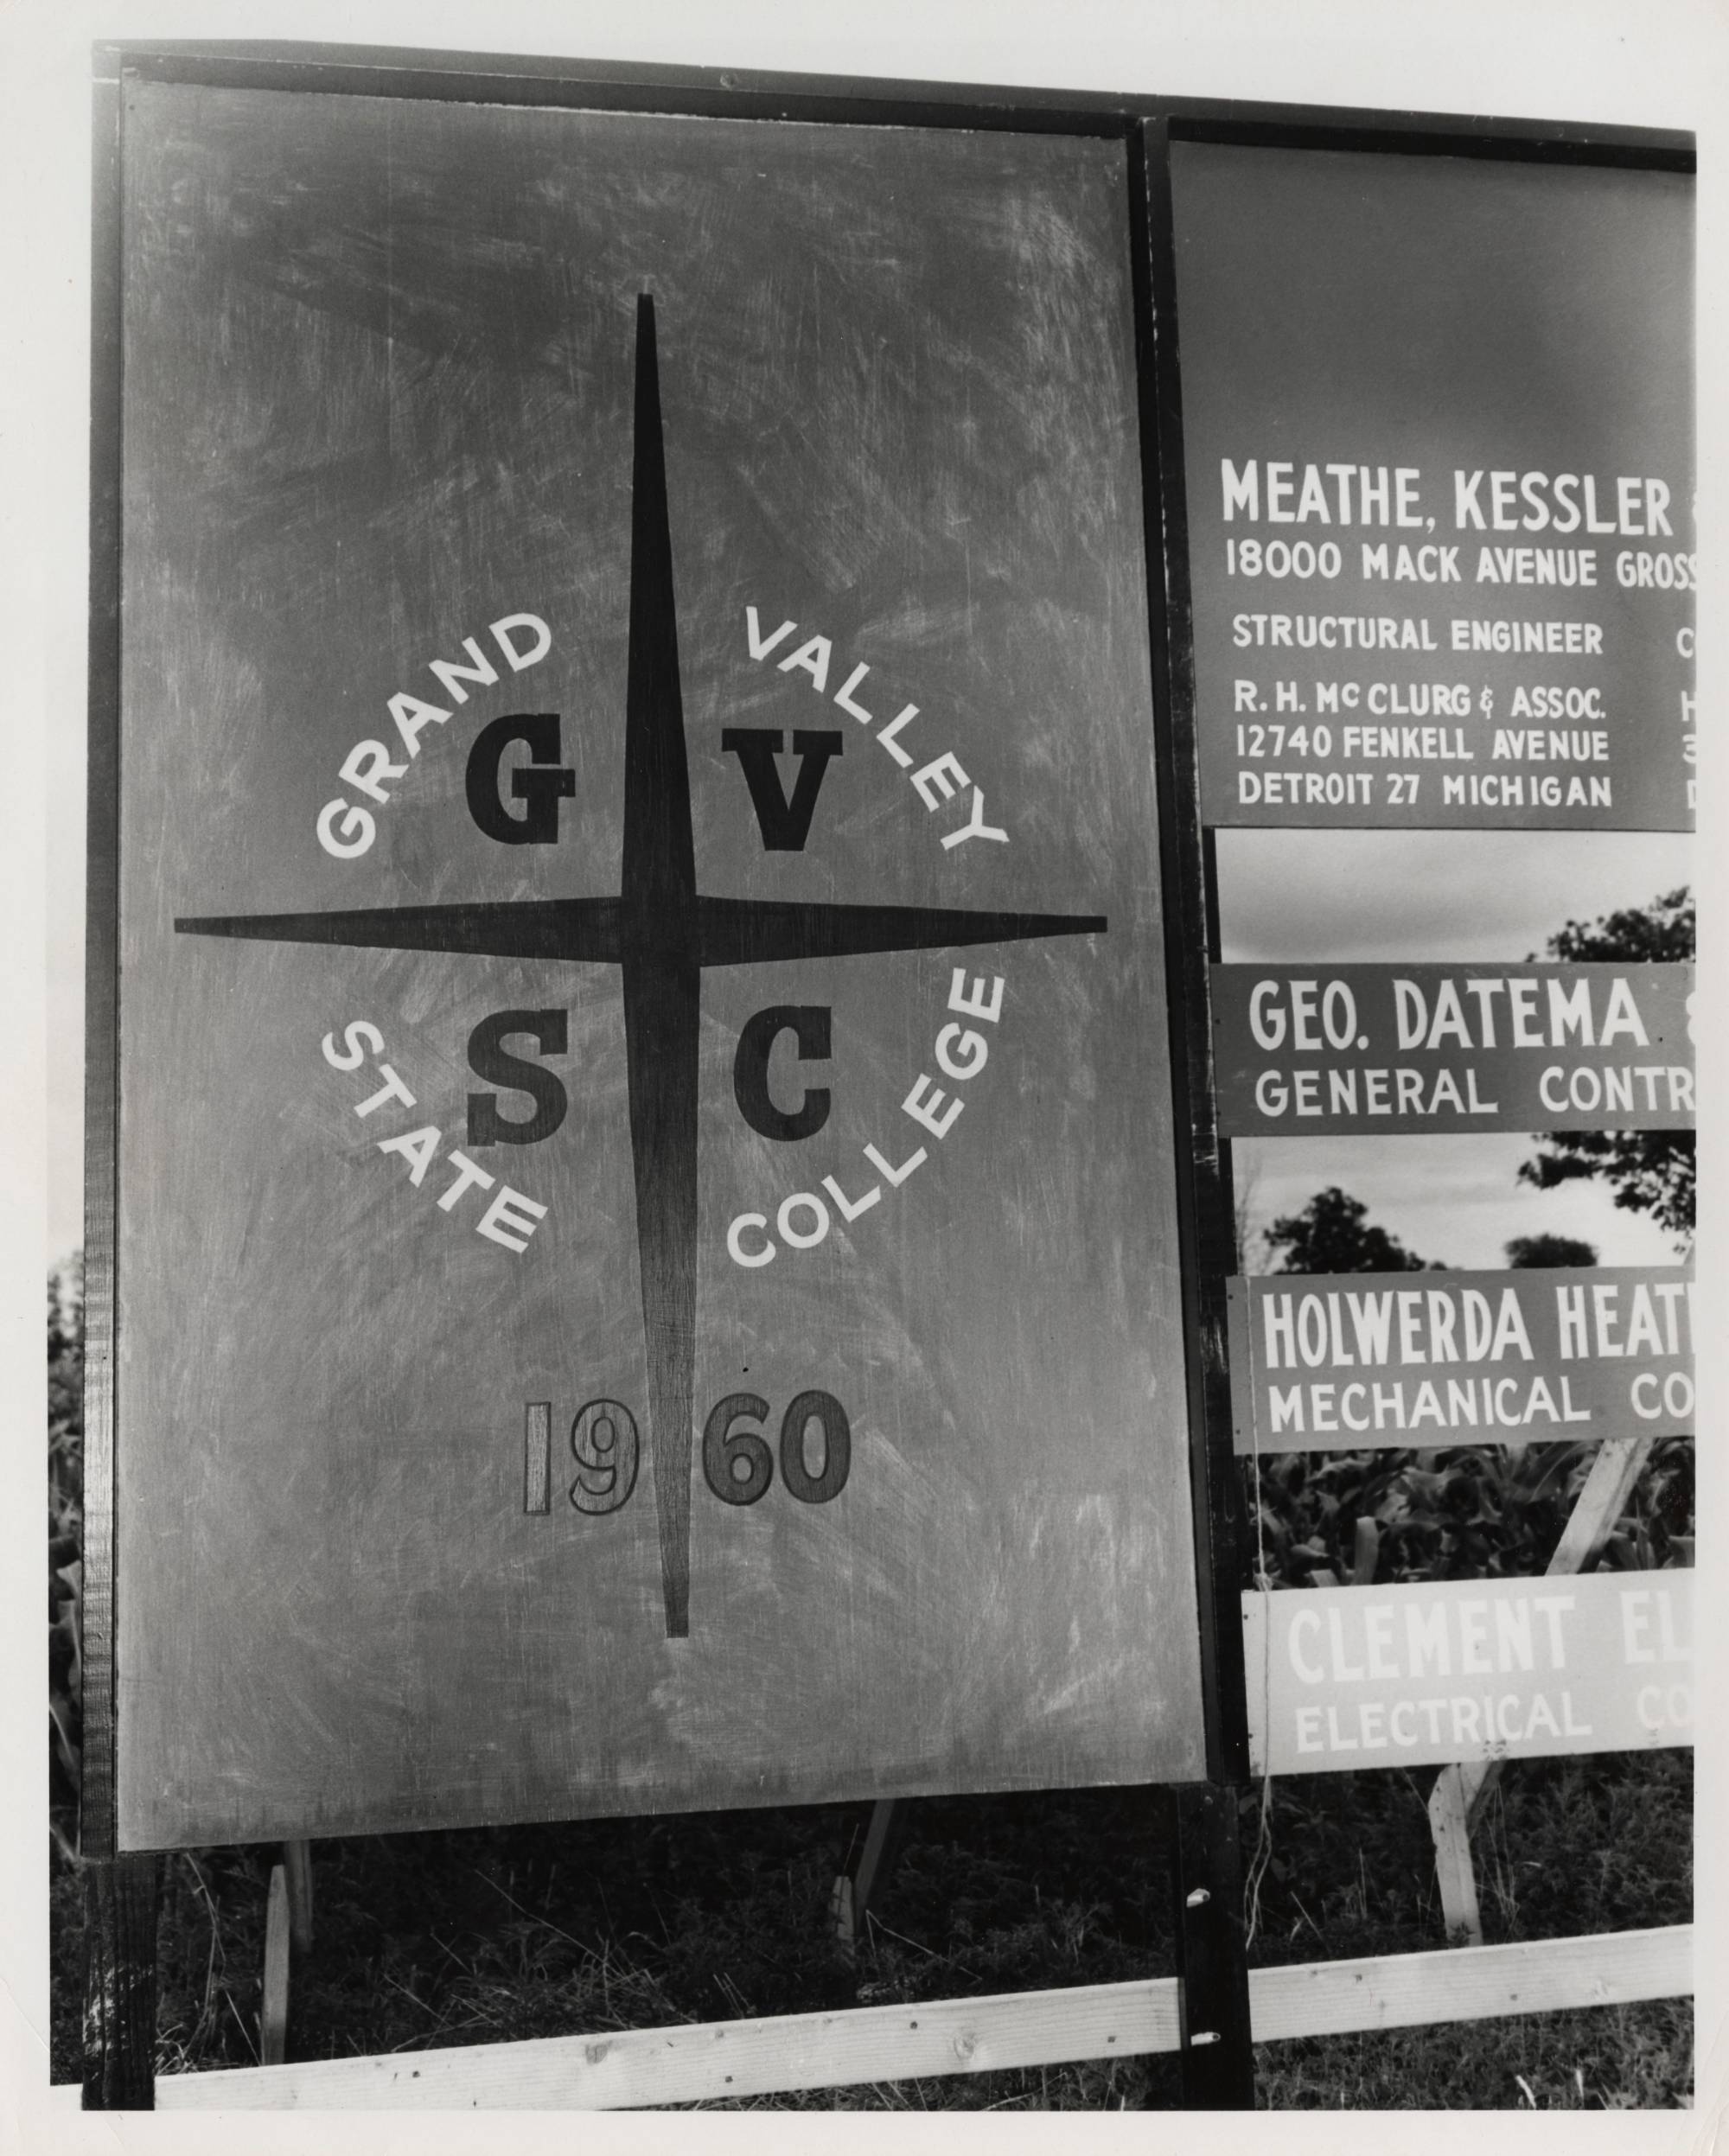 Plague of GVSC showing 1960 as founding date